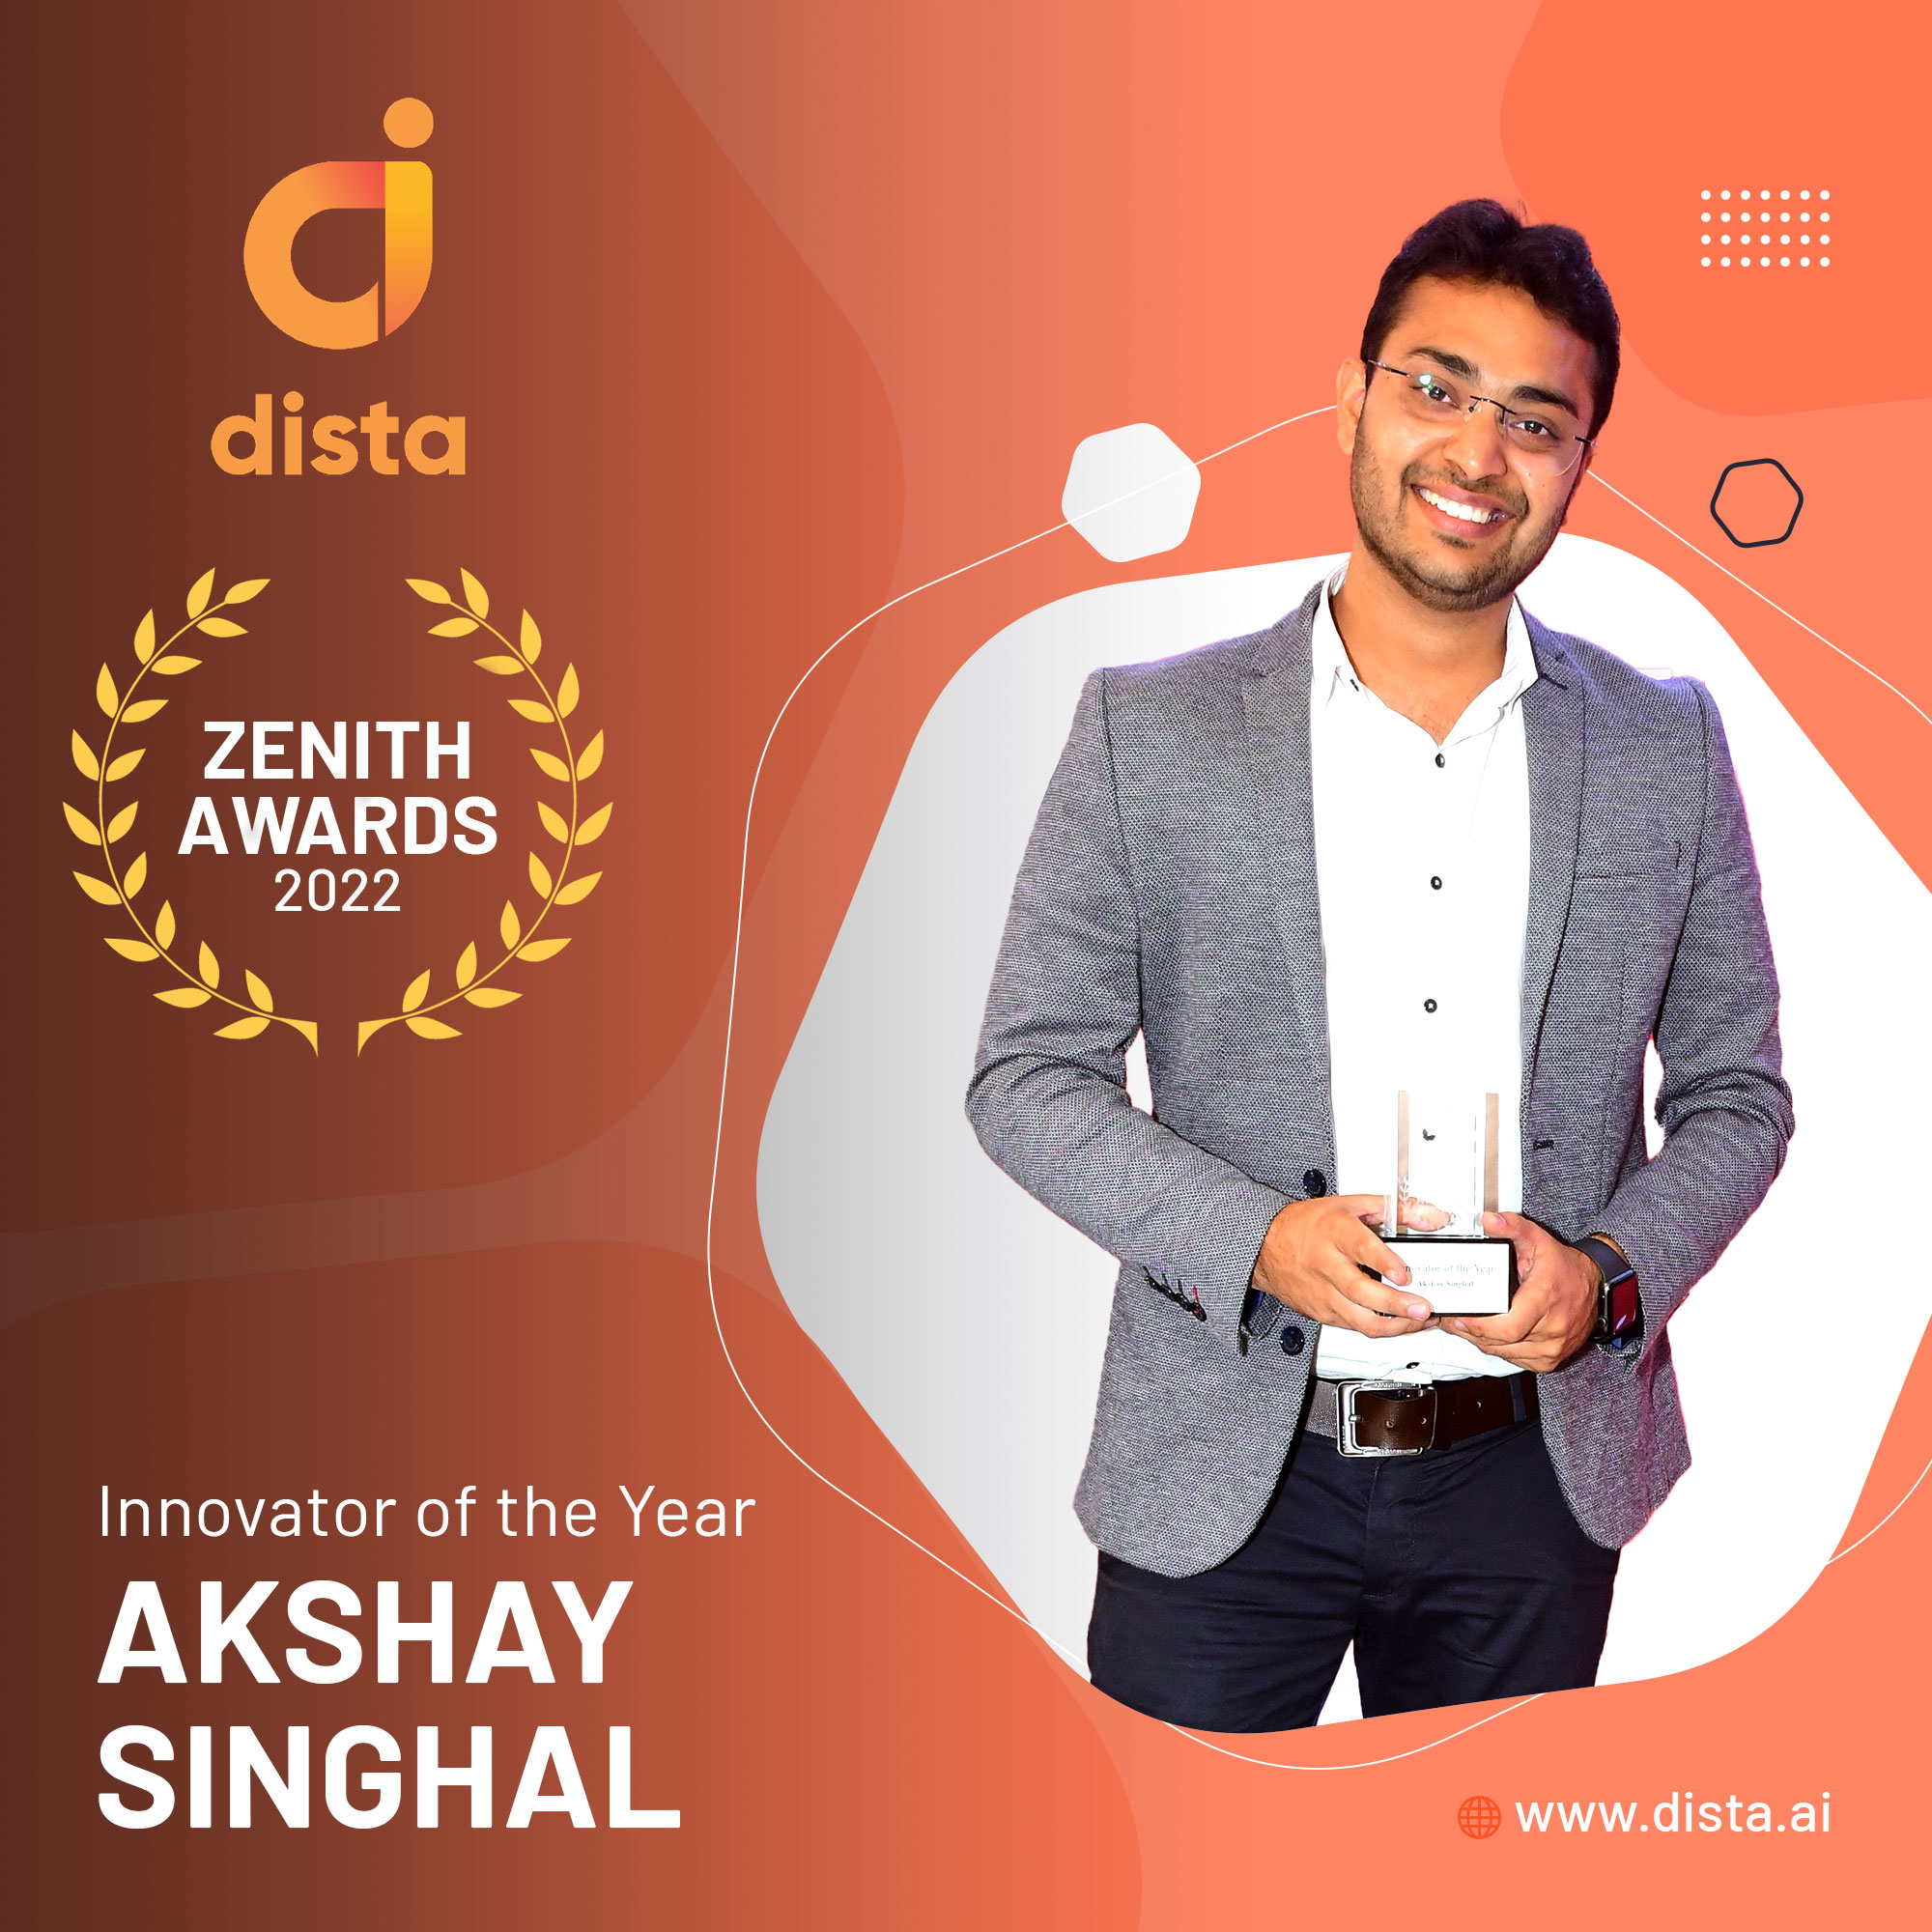 Akshay Singhal - Dista Zenith Awards 2022